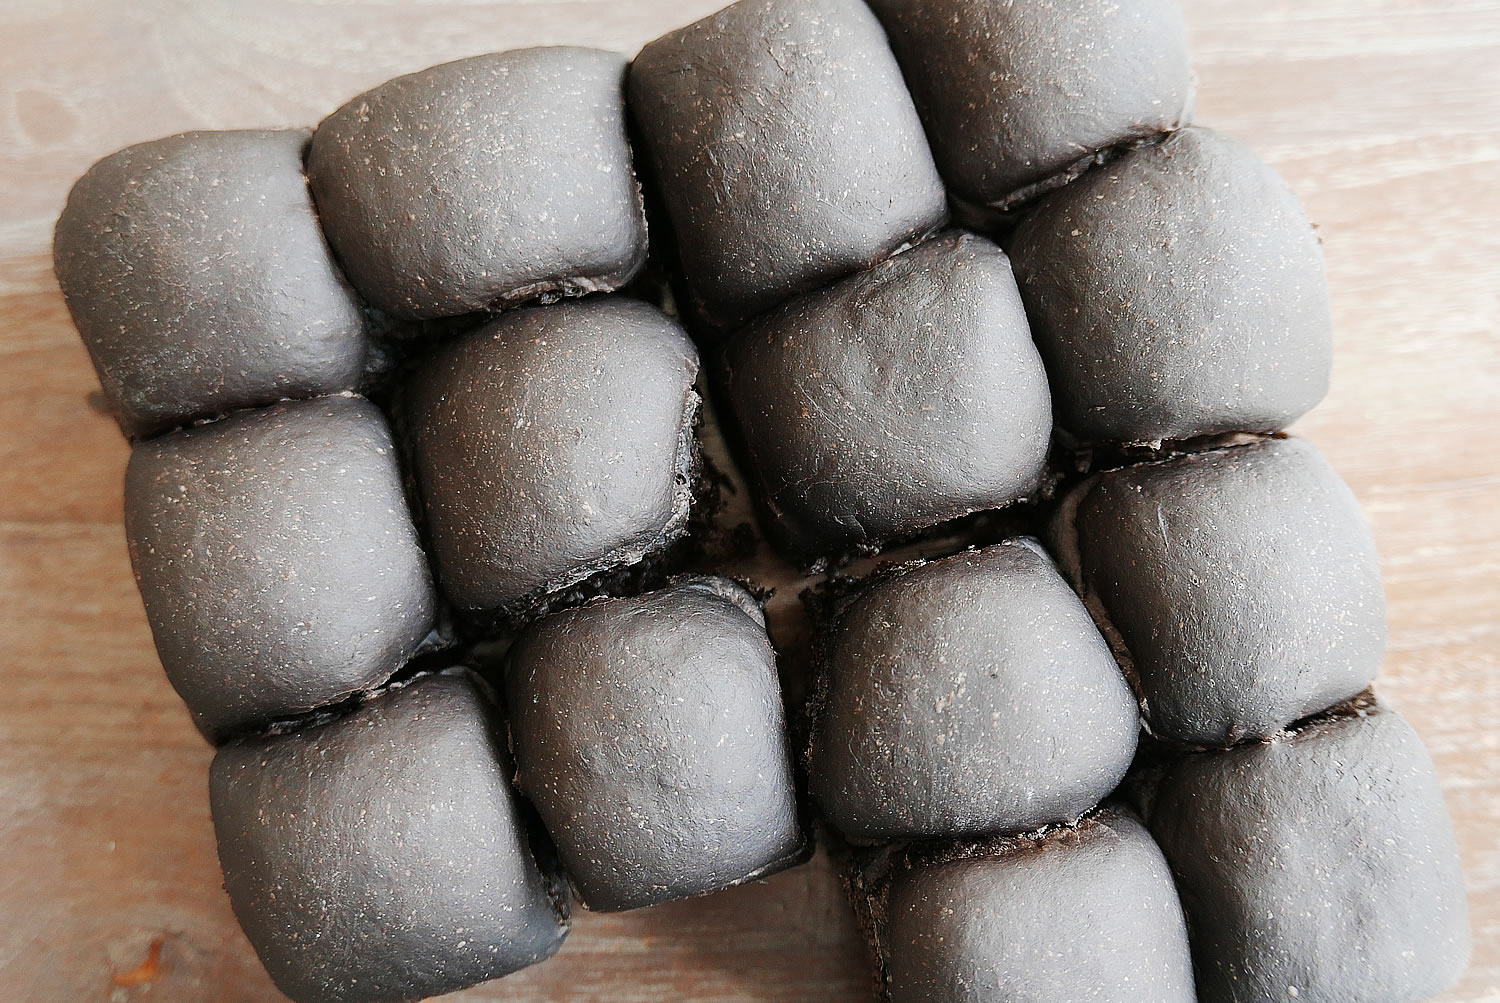 Fluffy black bread - Pull apart bread - Chigiri pan - Yudane